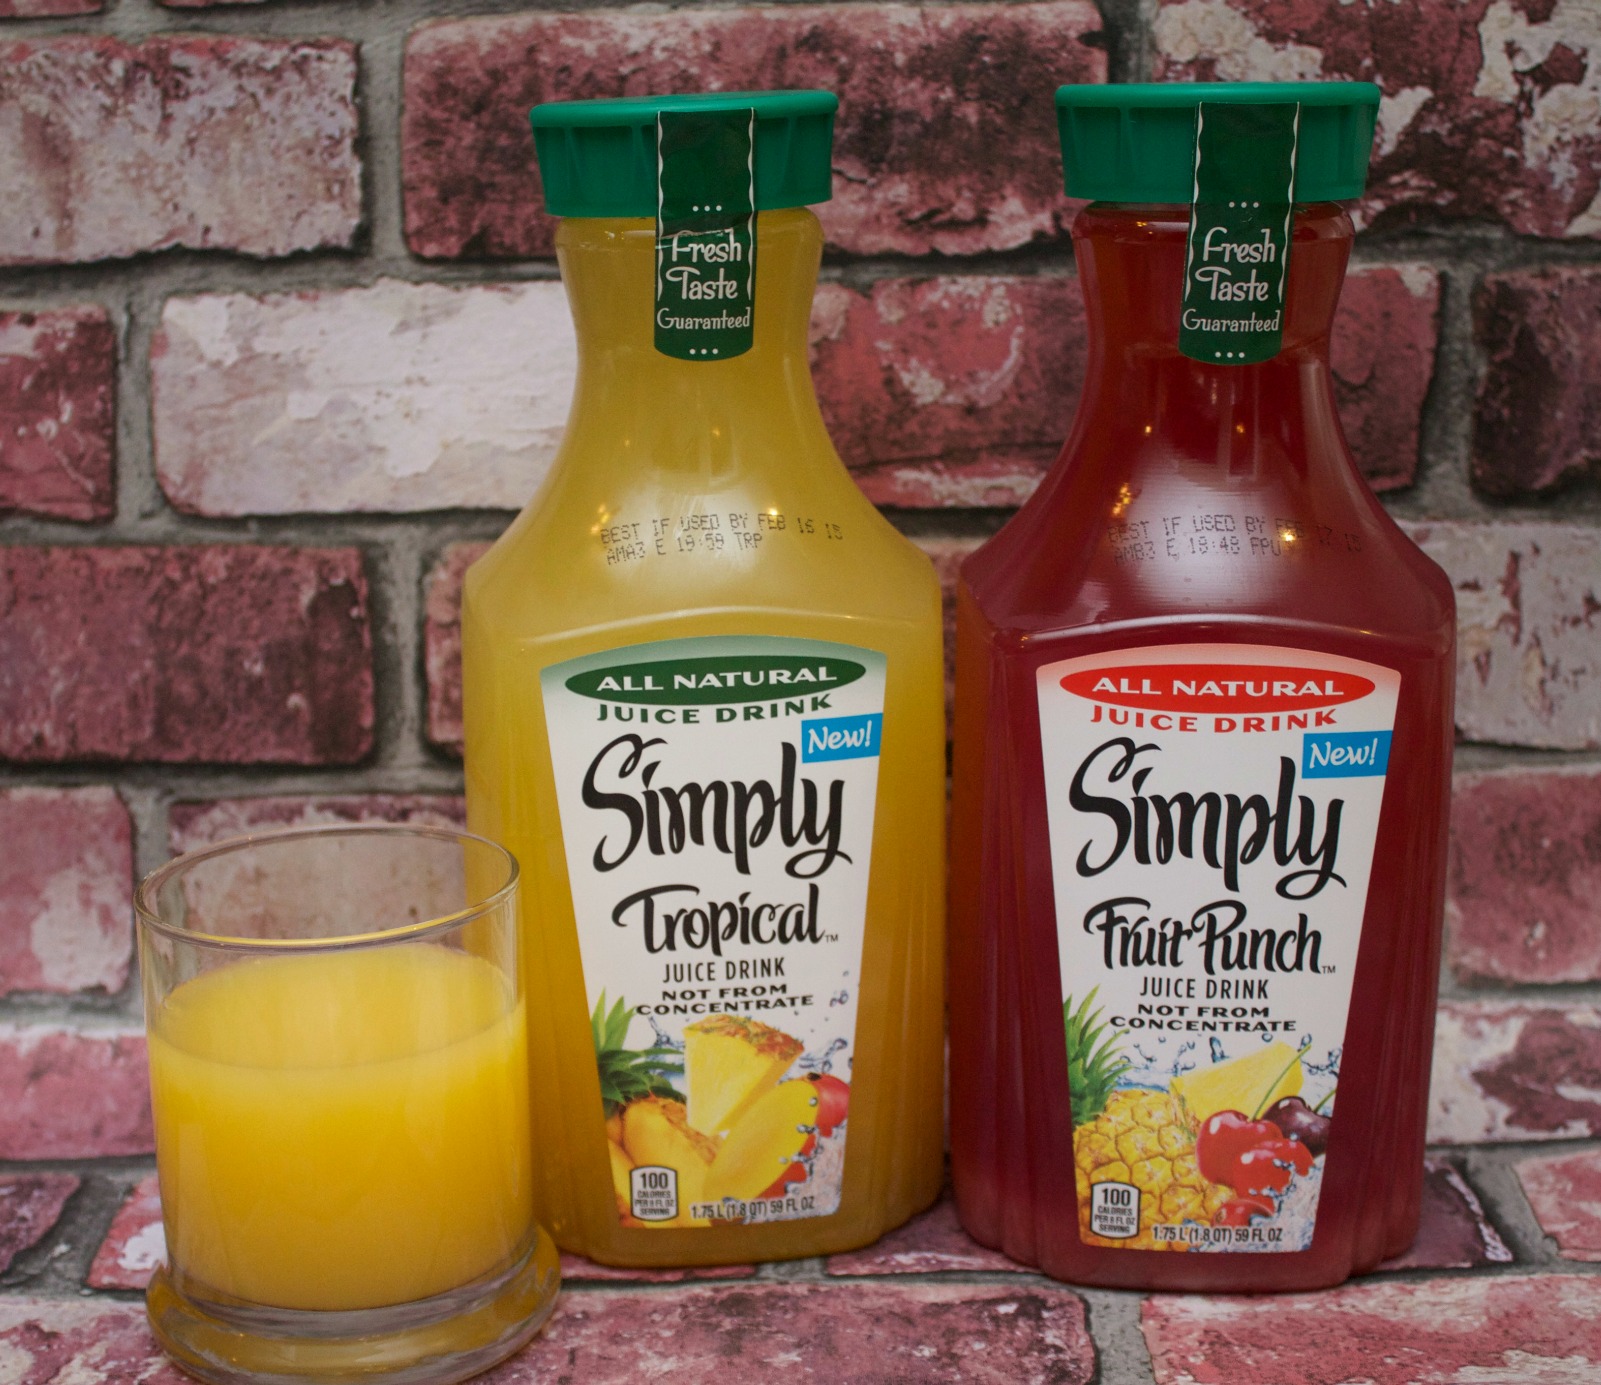 simply juice drinks -tropical drink 